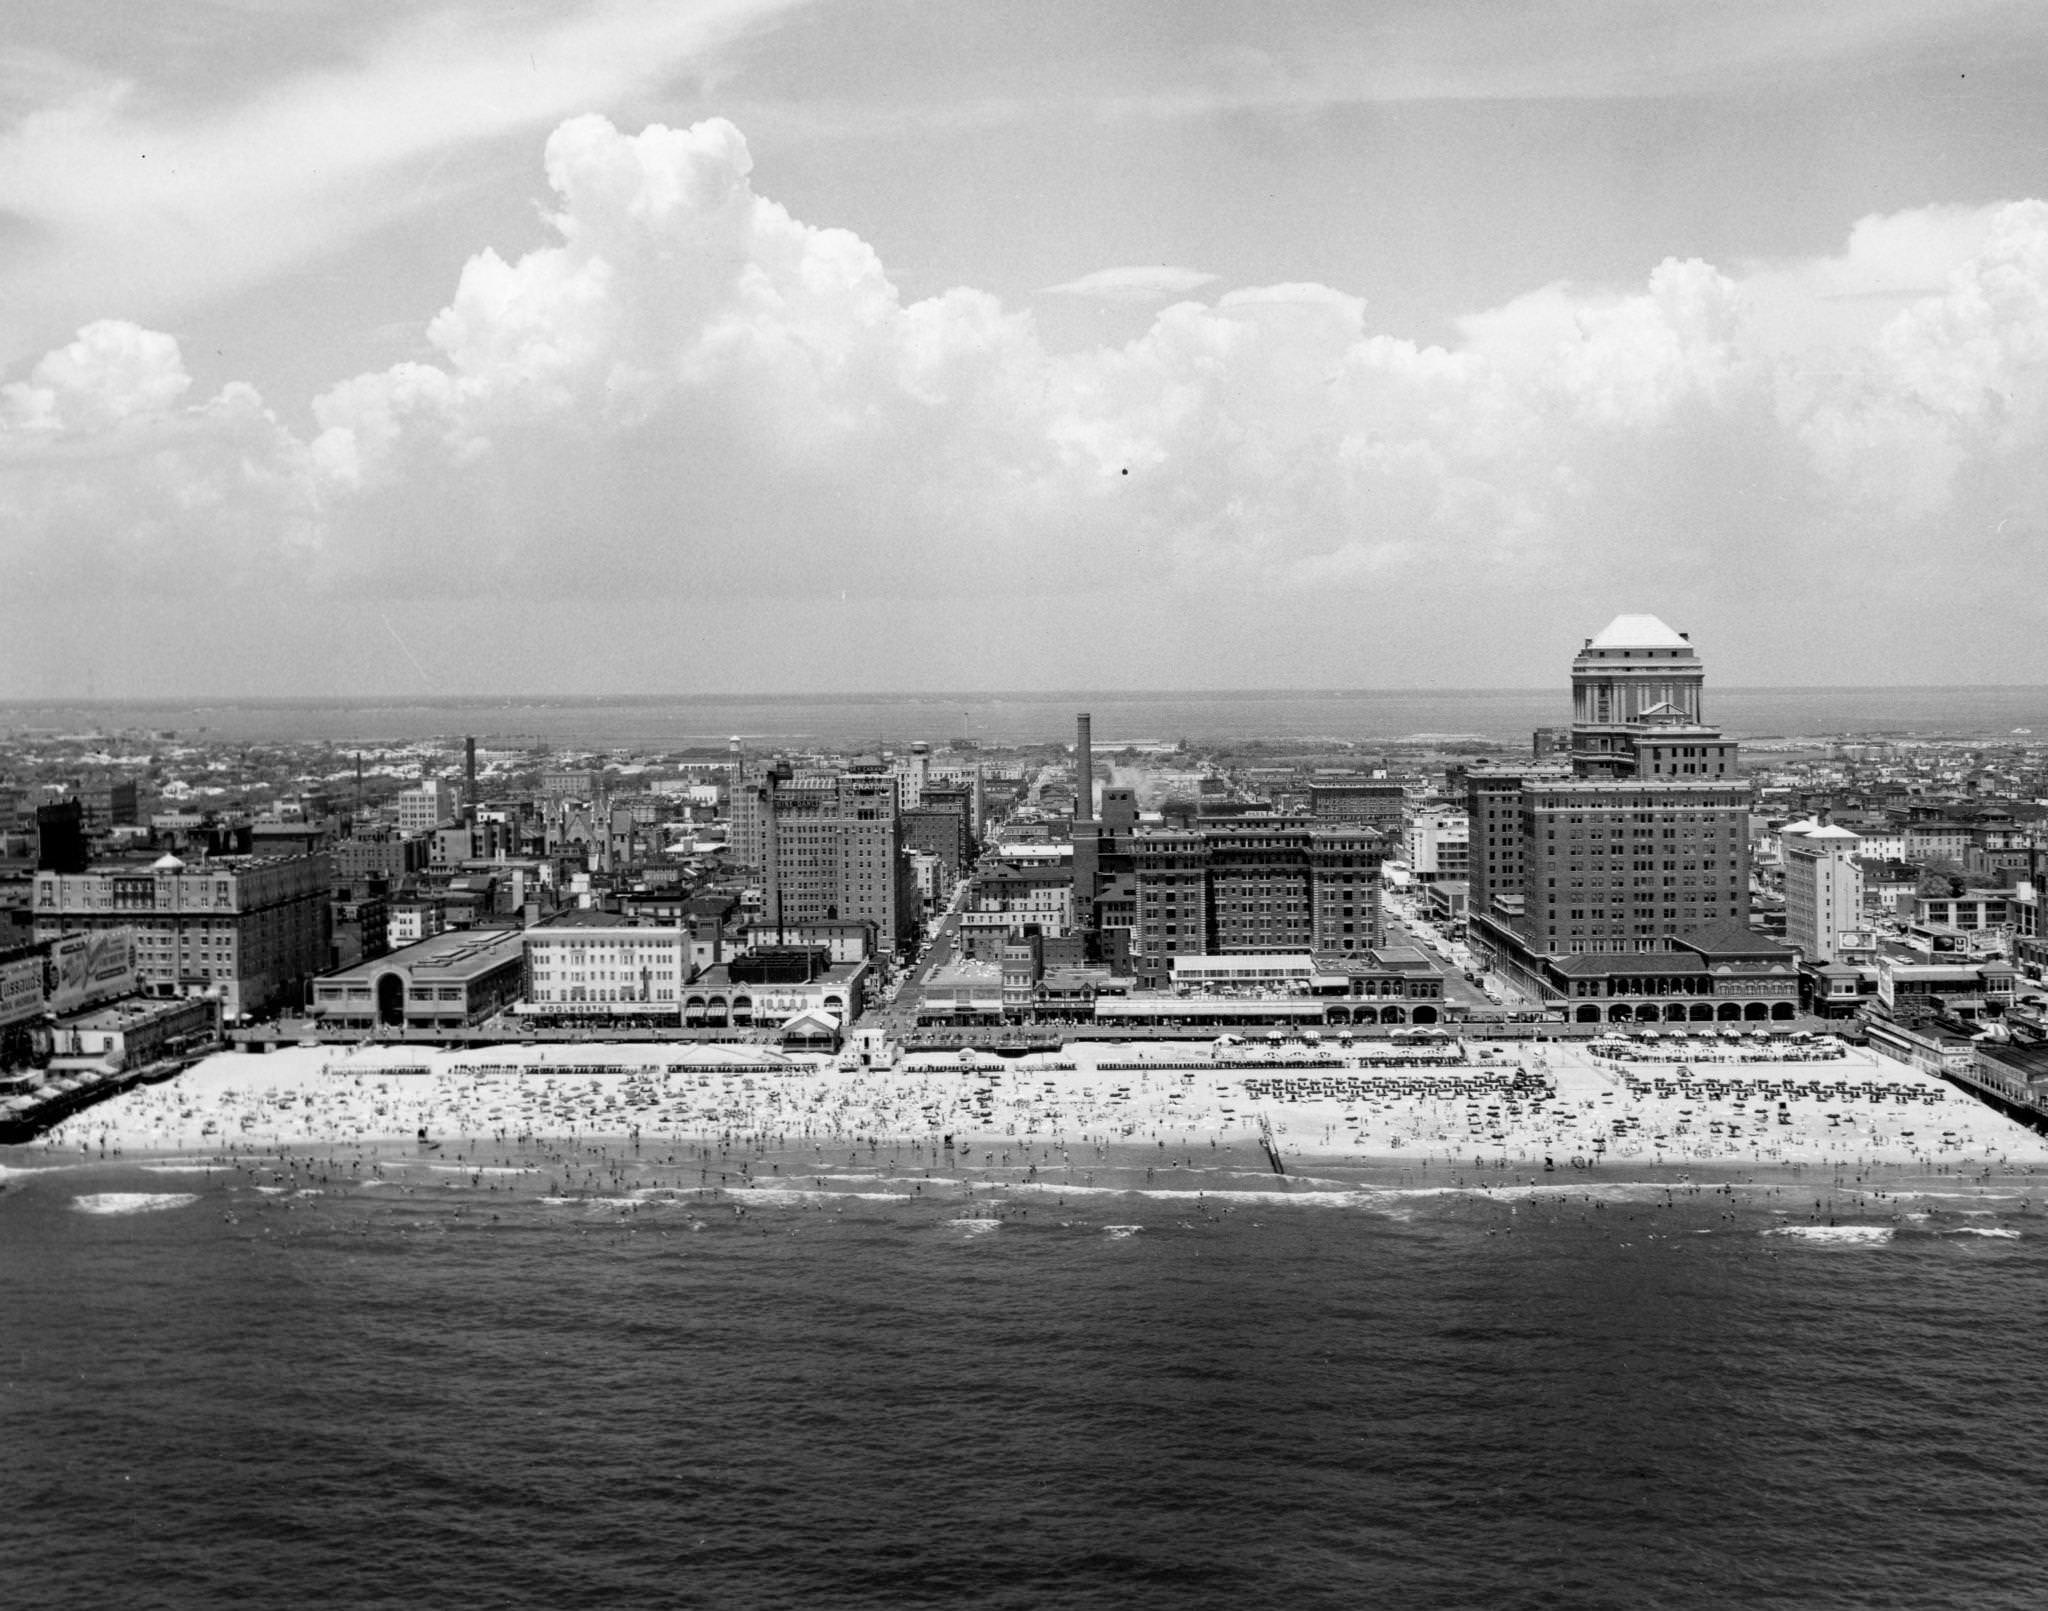 Atlantic City beach with the Haddon Hall Hotel (visible at right), Atlantic City, 1964